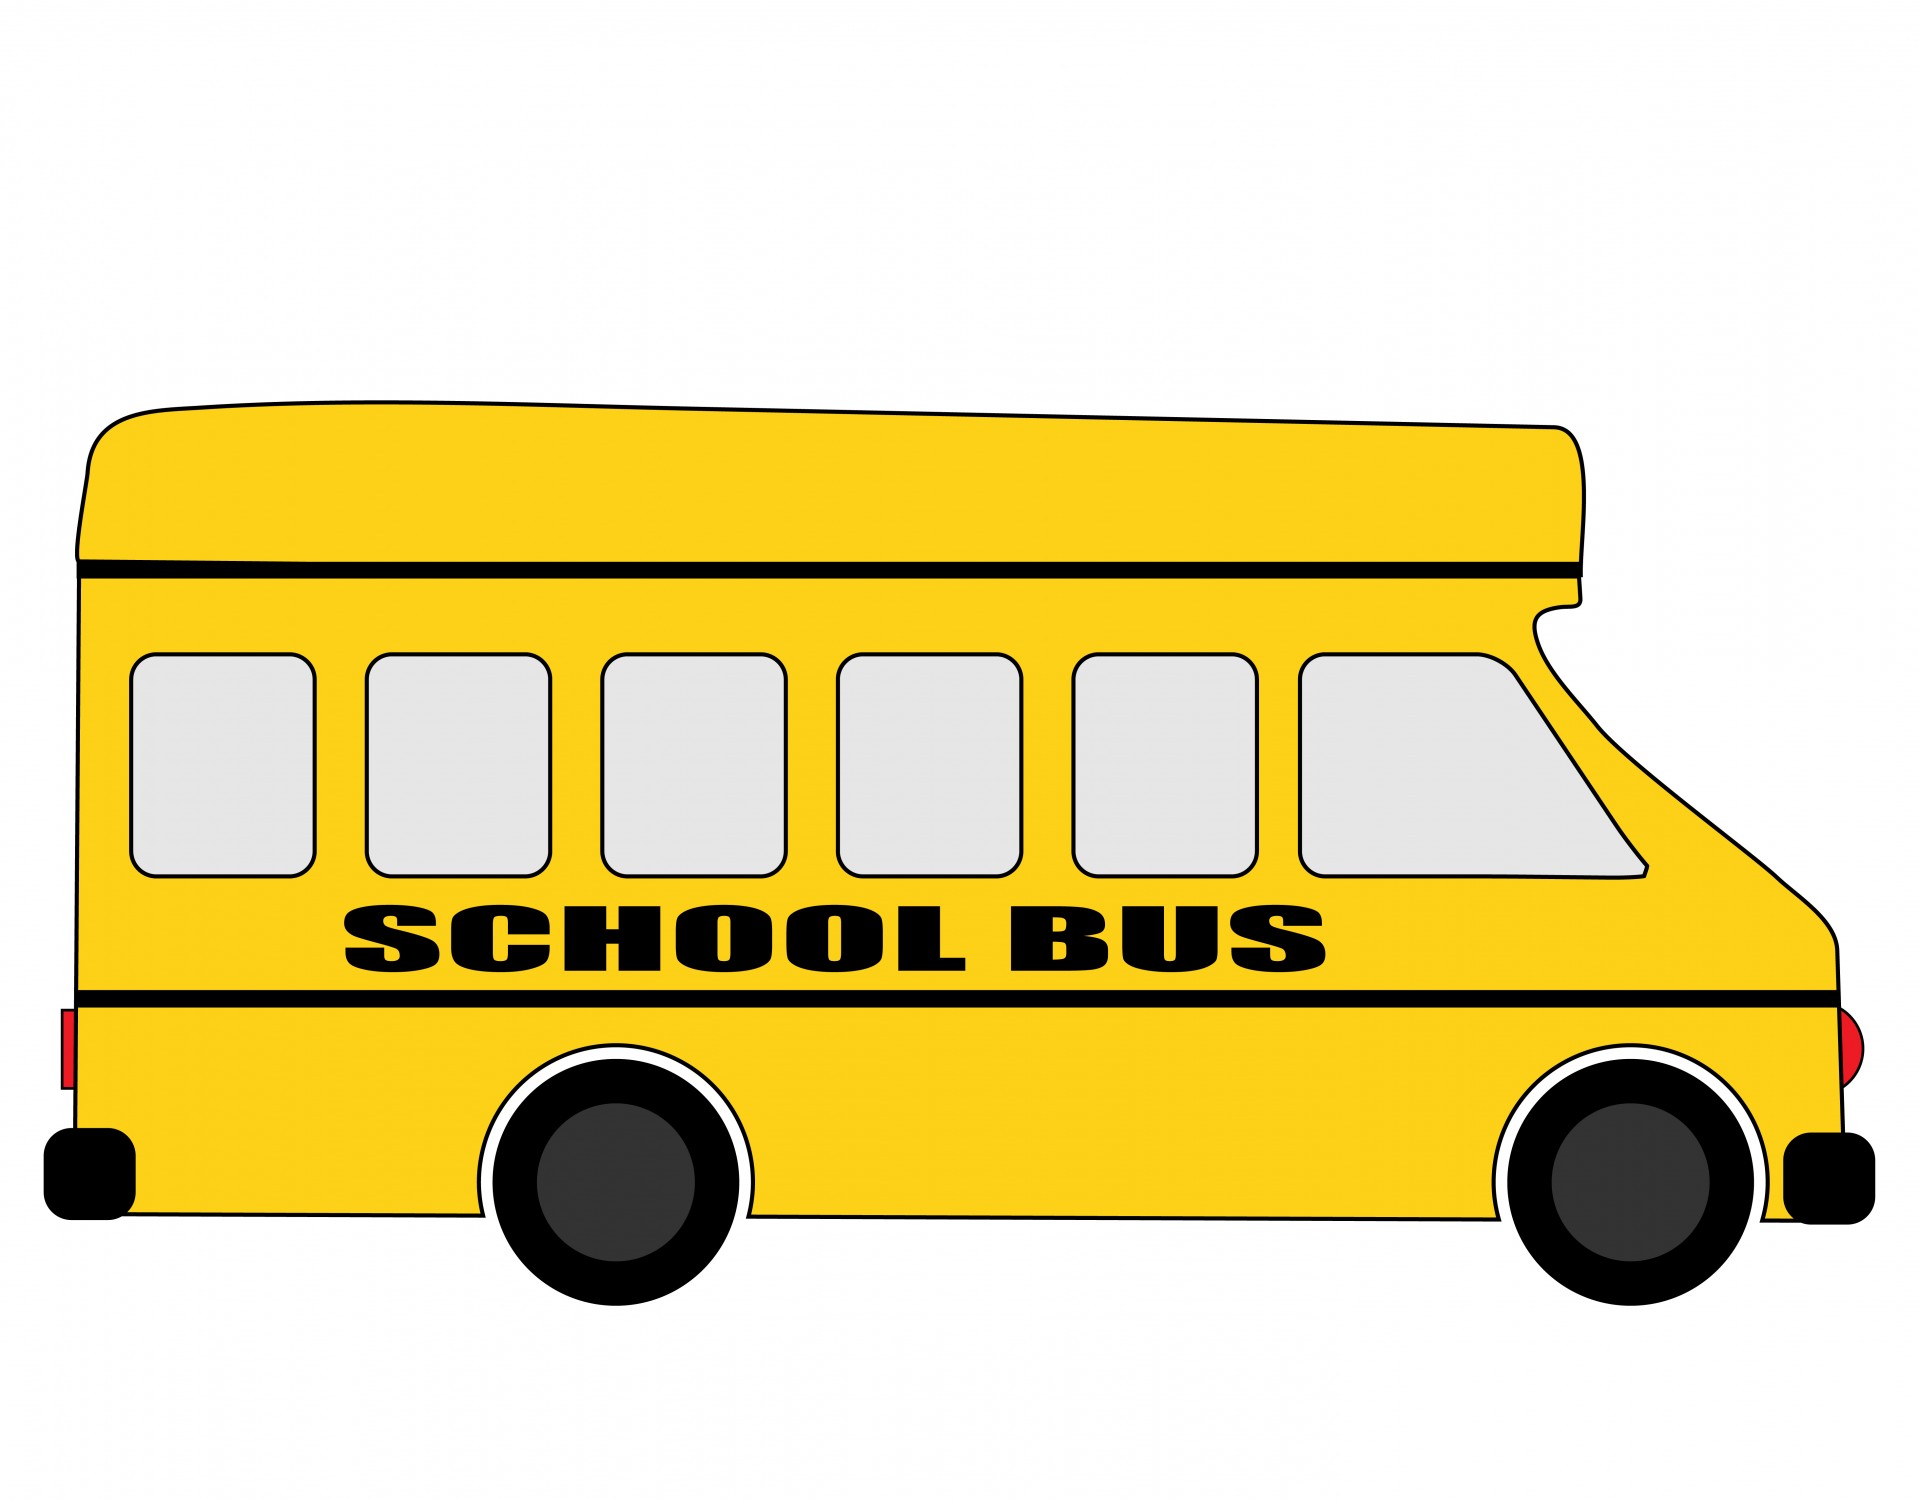 Cute school bus clip art free clipart images 2